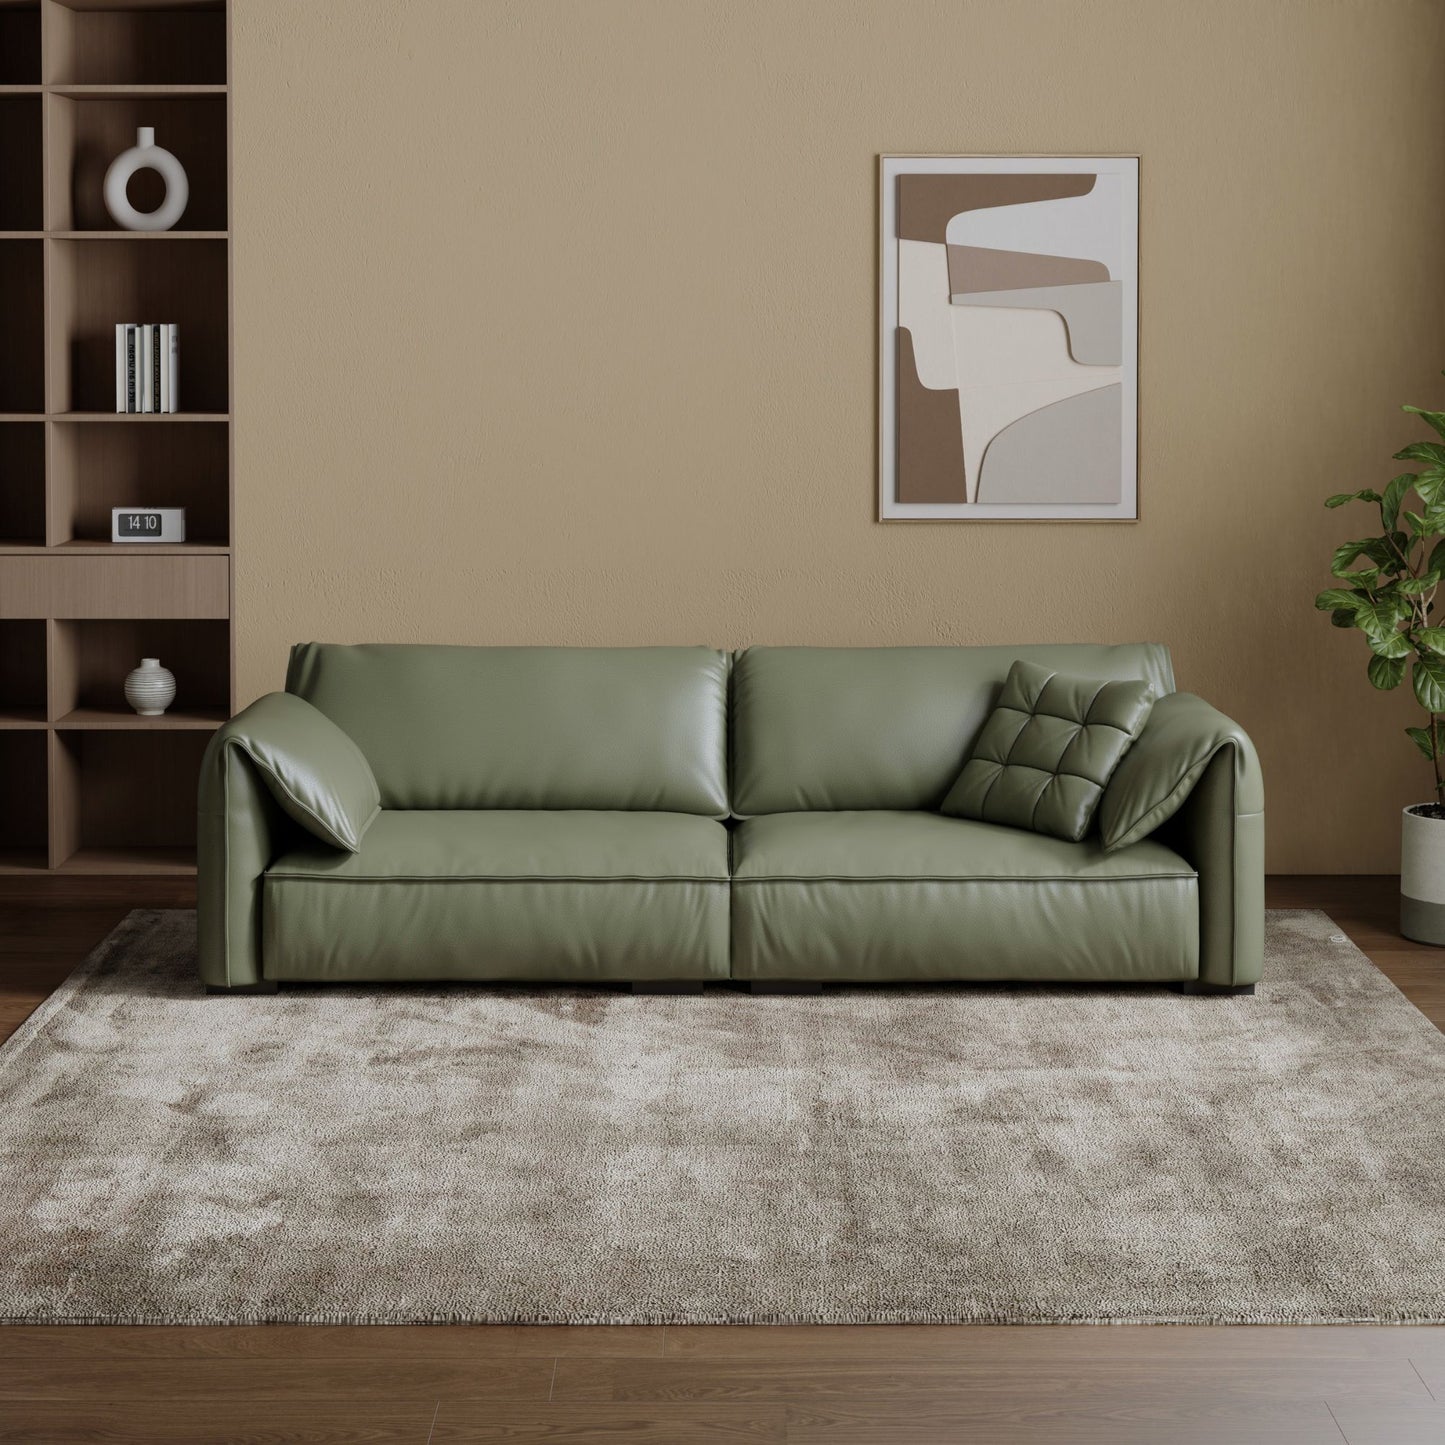 Comfy green top grain full leather sofa